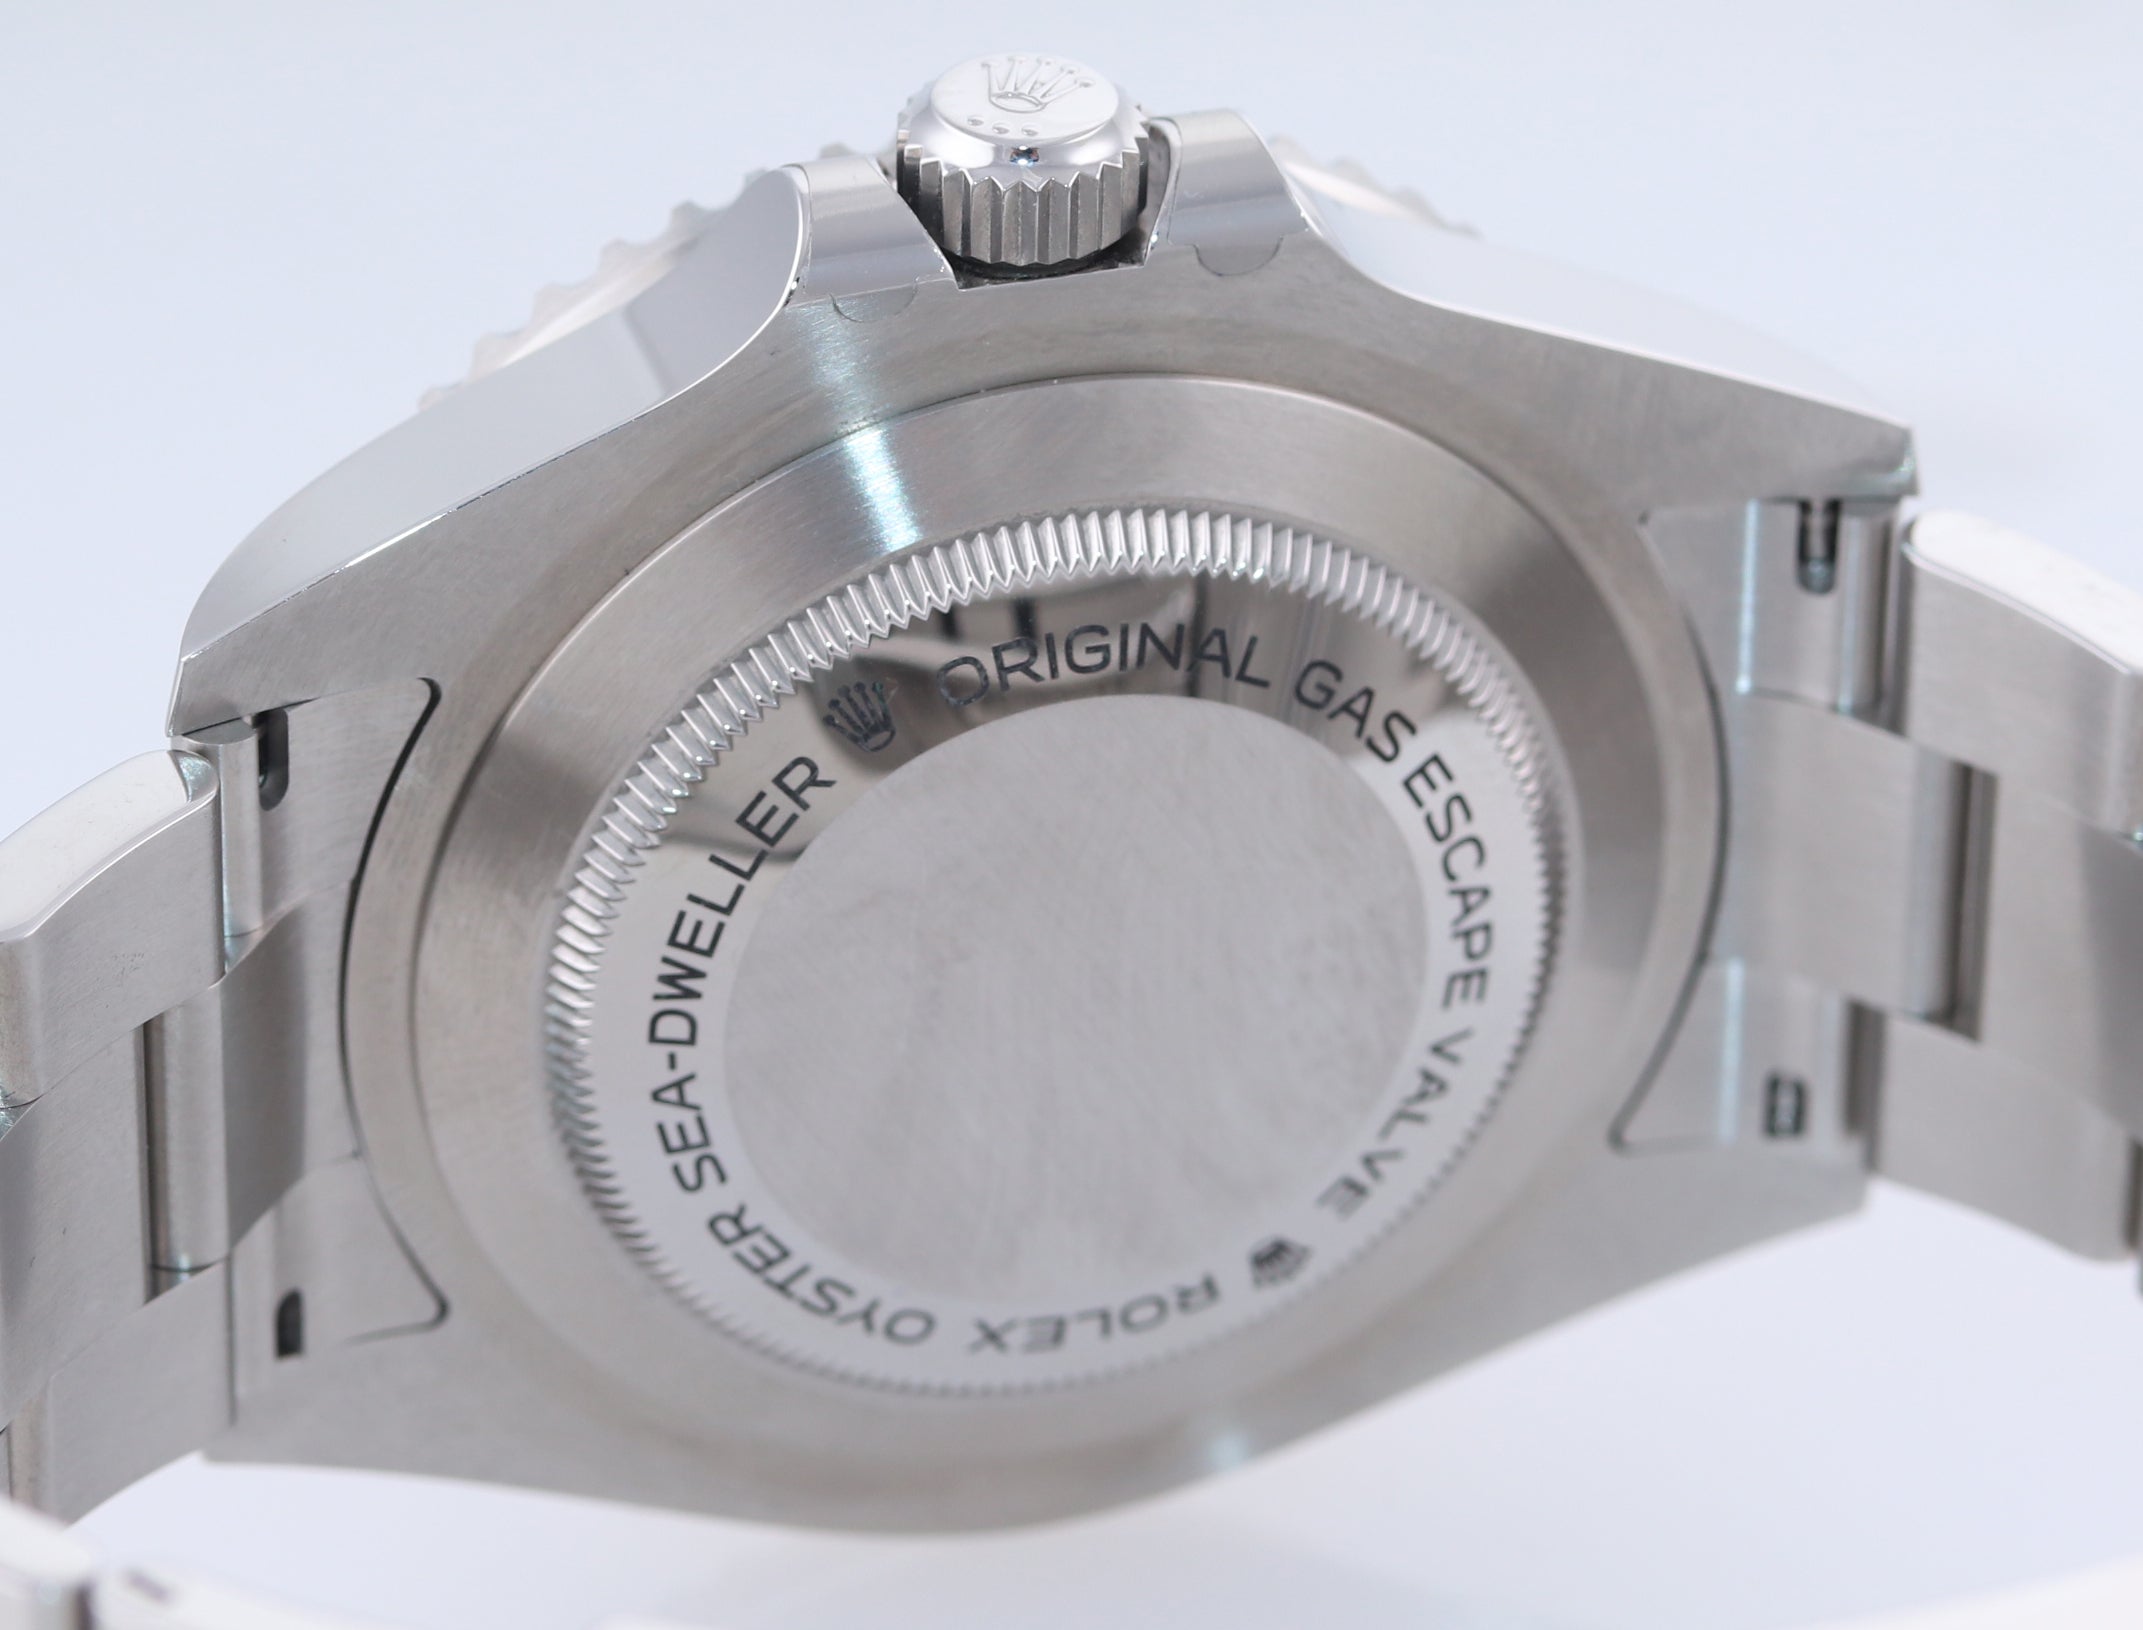 BRAND NEW 2019 PAPERS Mark II Rolex Red Sea-Dweller 43mm 126600 Steel Watch